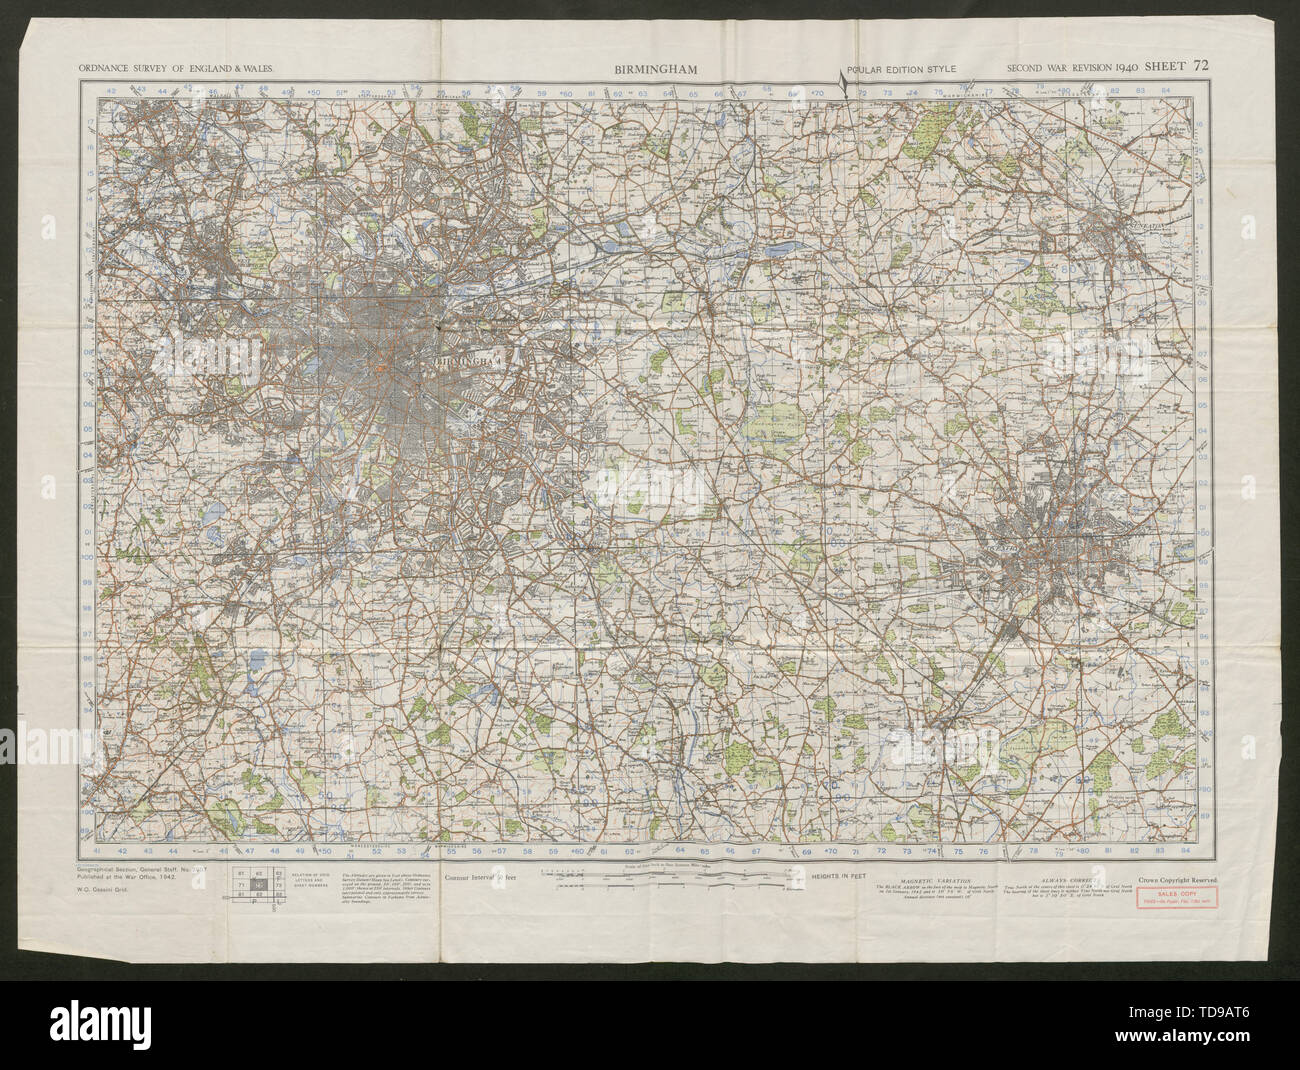 War Revision Sheet 72 BIRMINGHAM Coventry West Midlands ORDNANCE SURVEY 1942 map Stock Photo